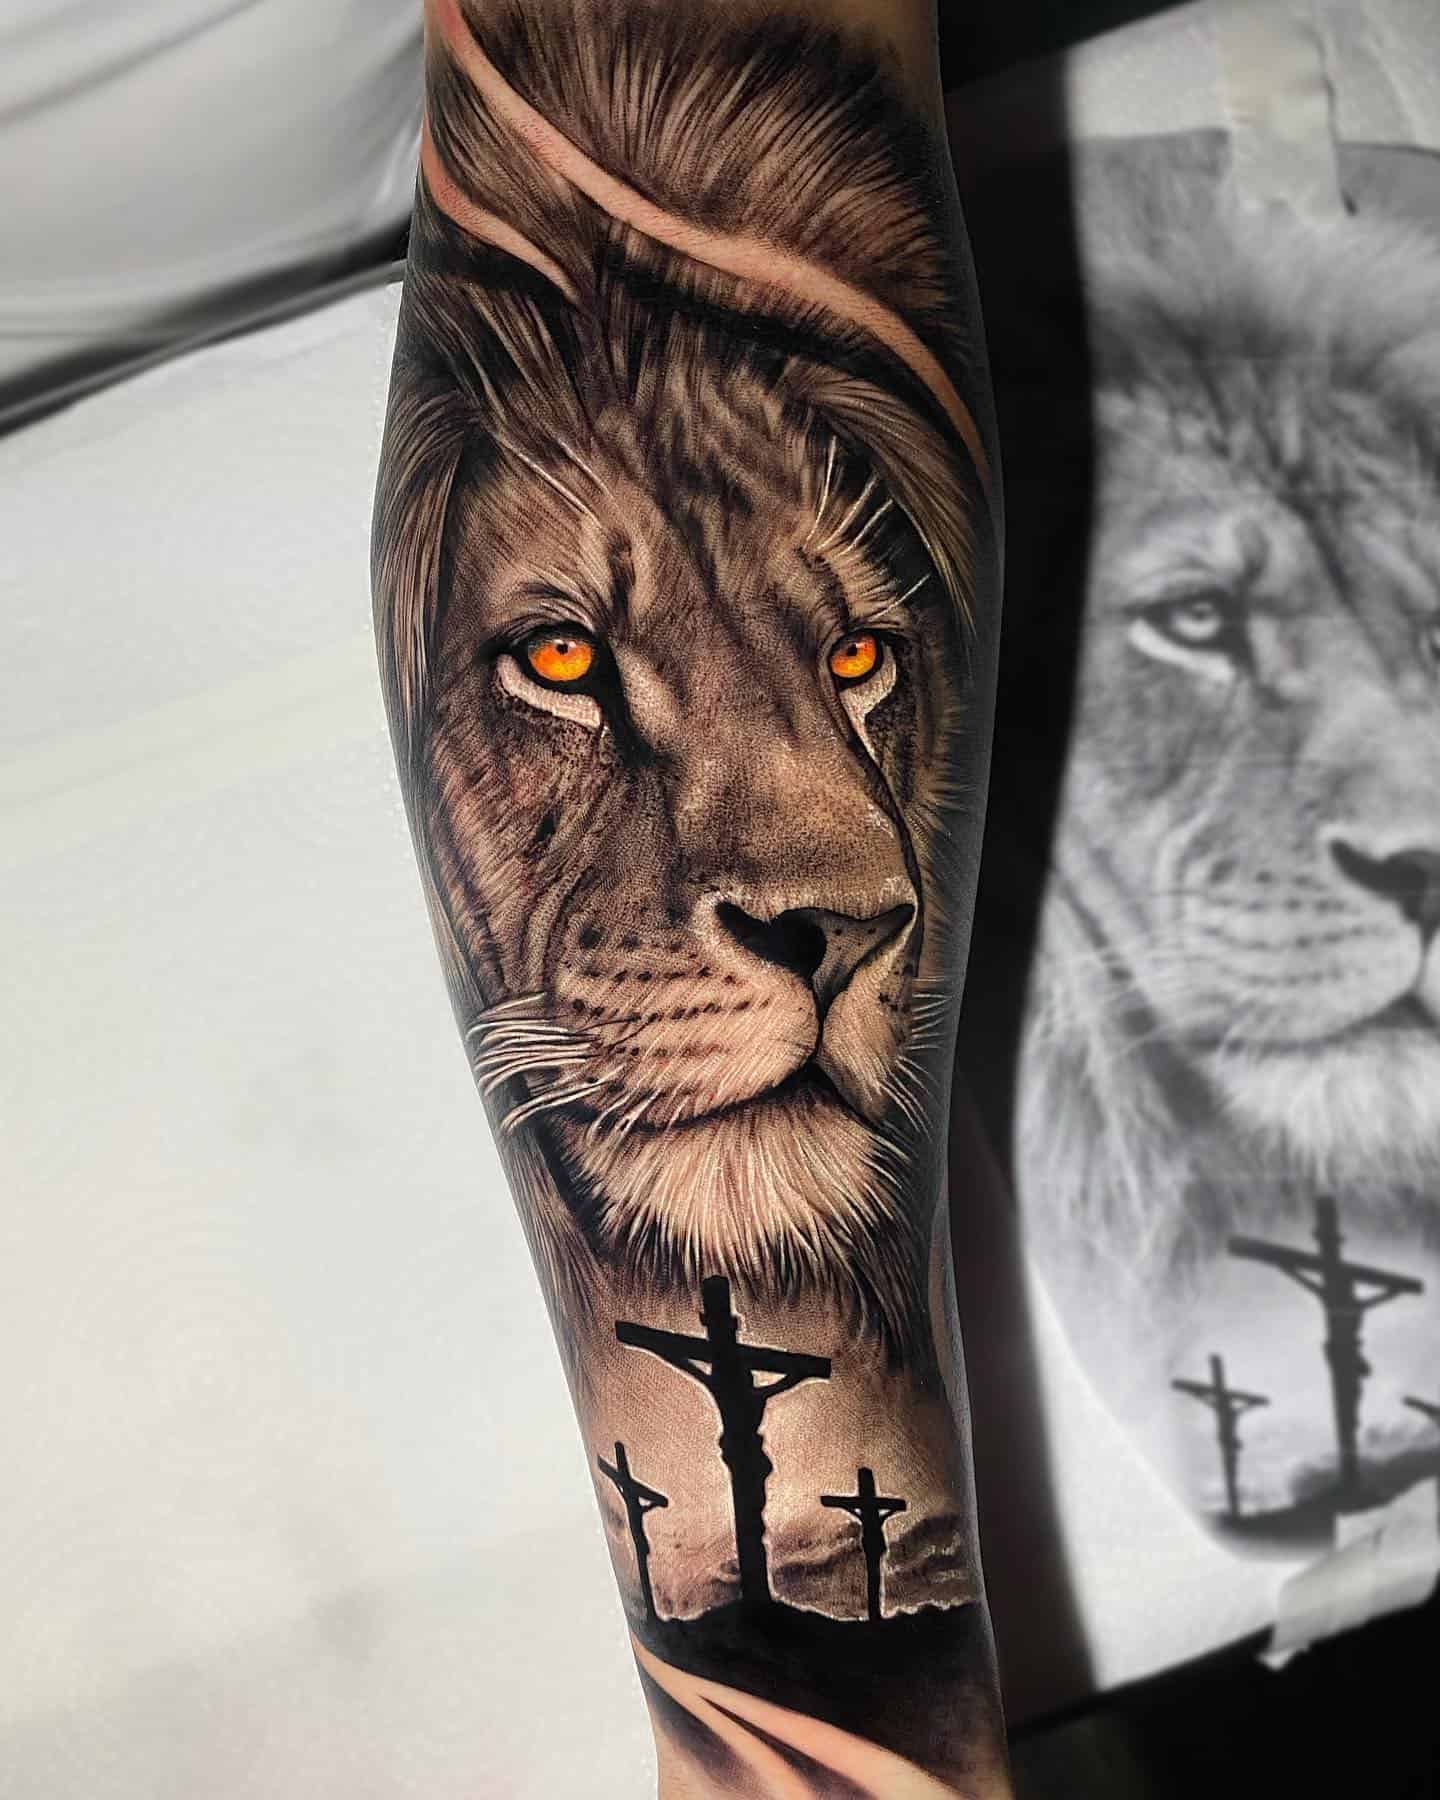 lion and cross tattoo